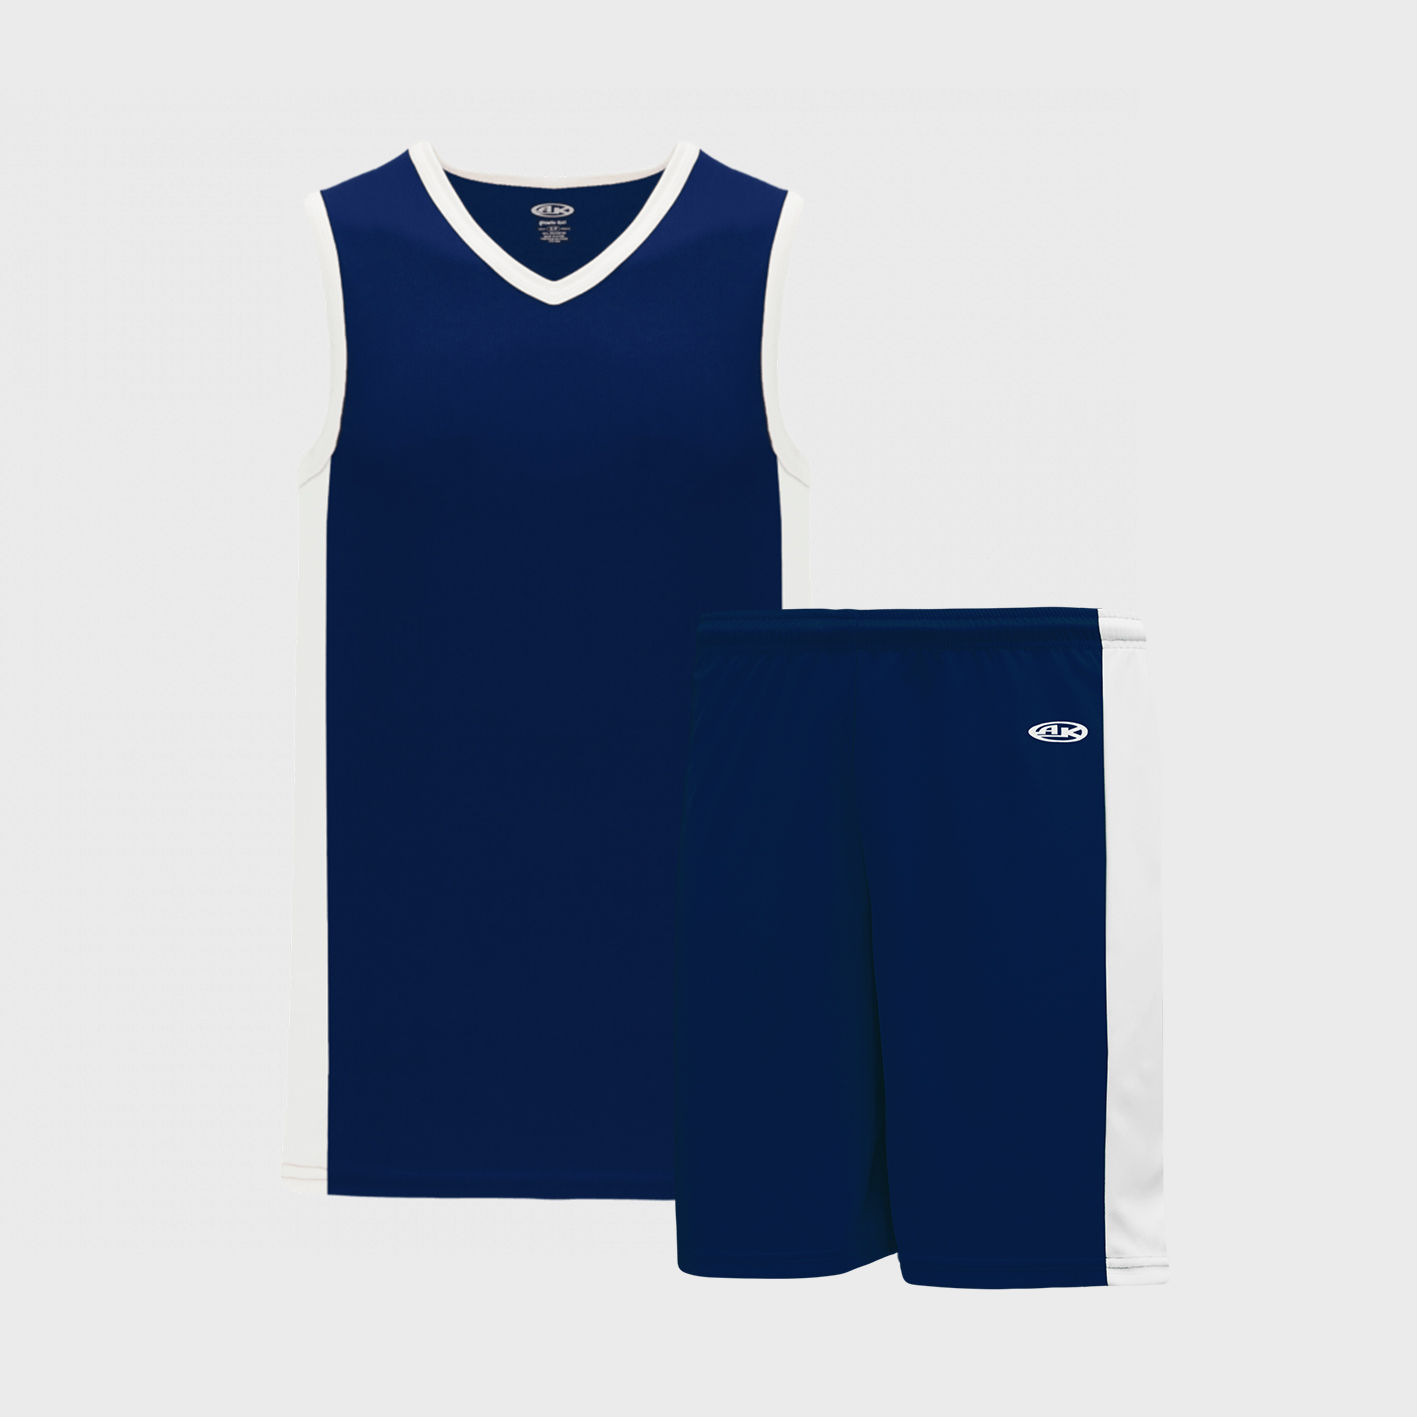 embroidery dallas blue basketball jerseys custom